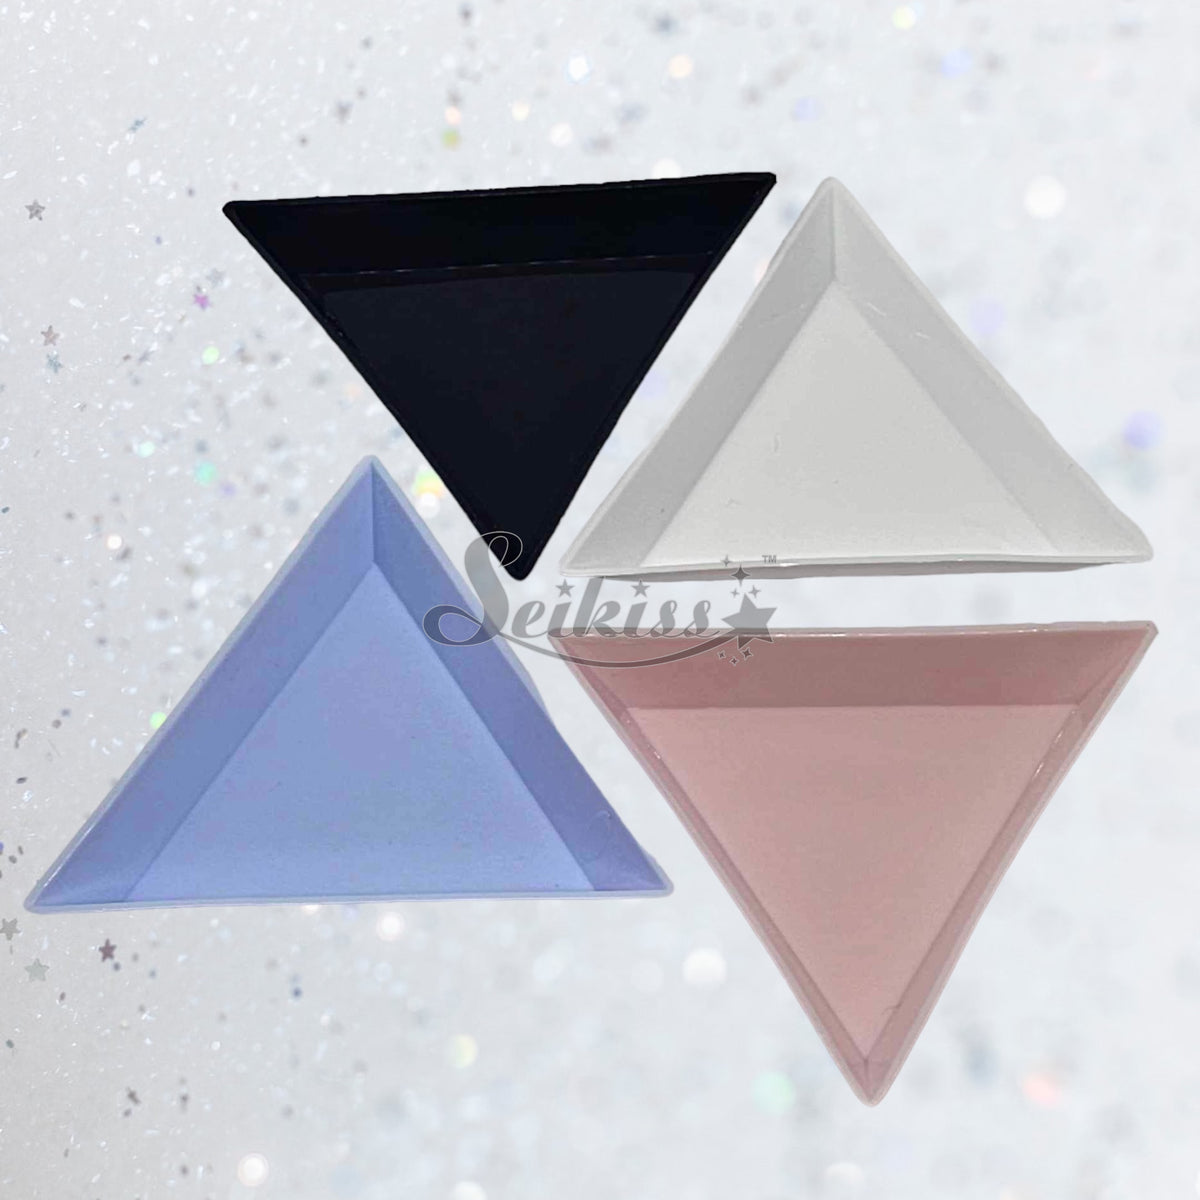 Triangle Palette for Glitter, Nails, Rhinestones - White, Black, Pink, Blue